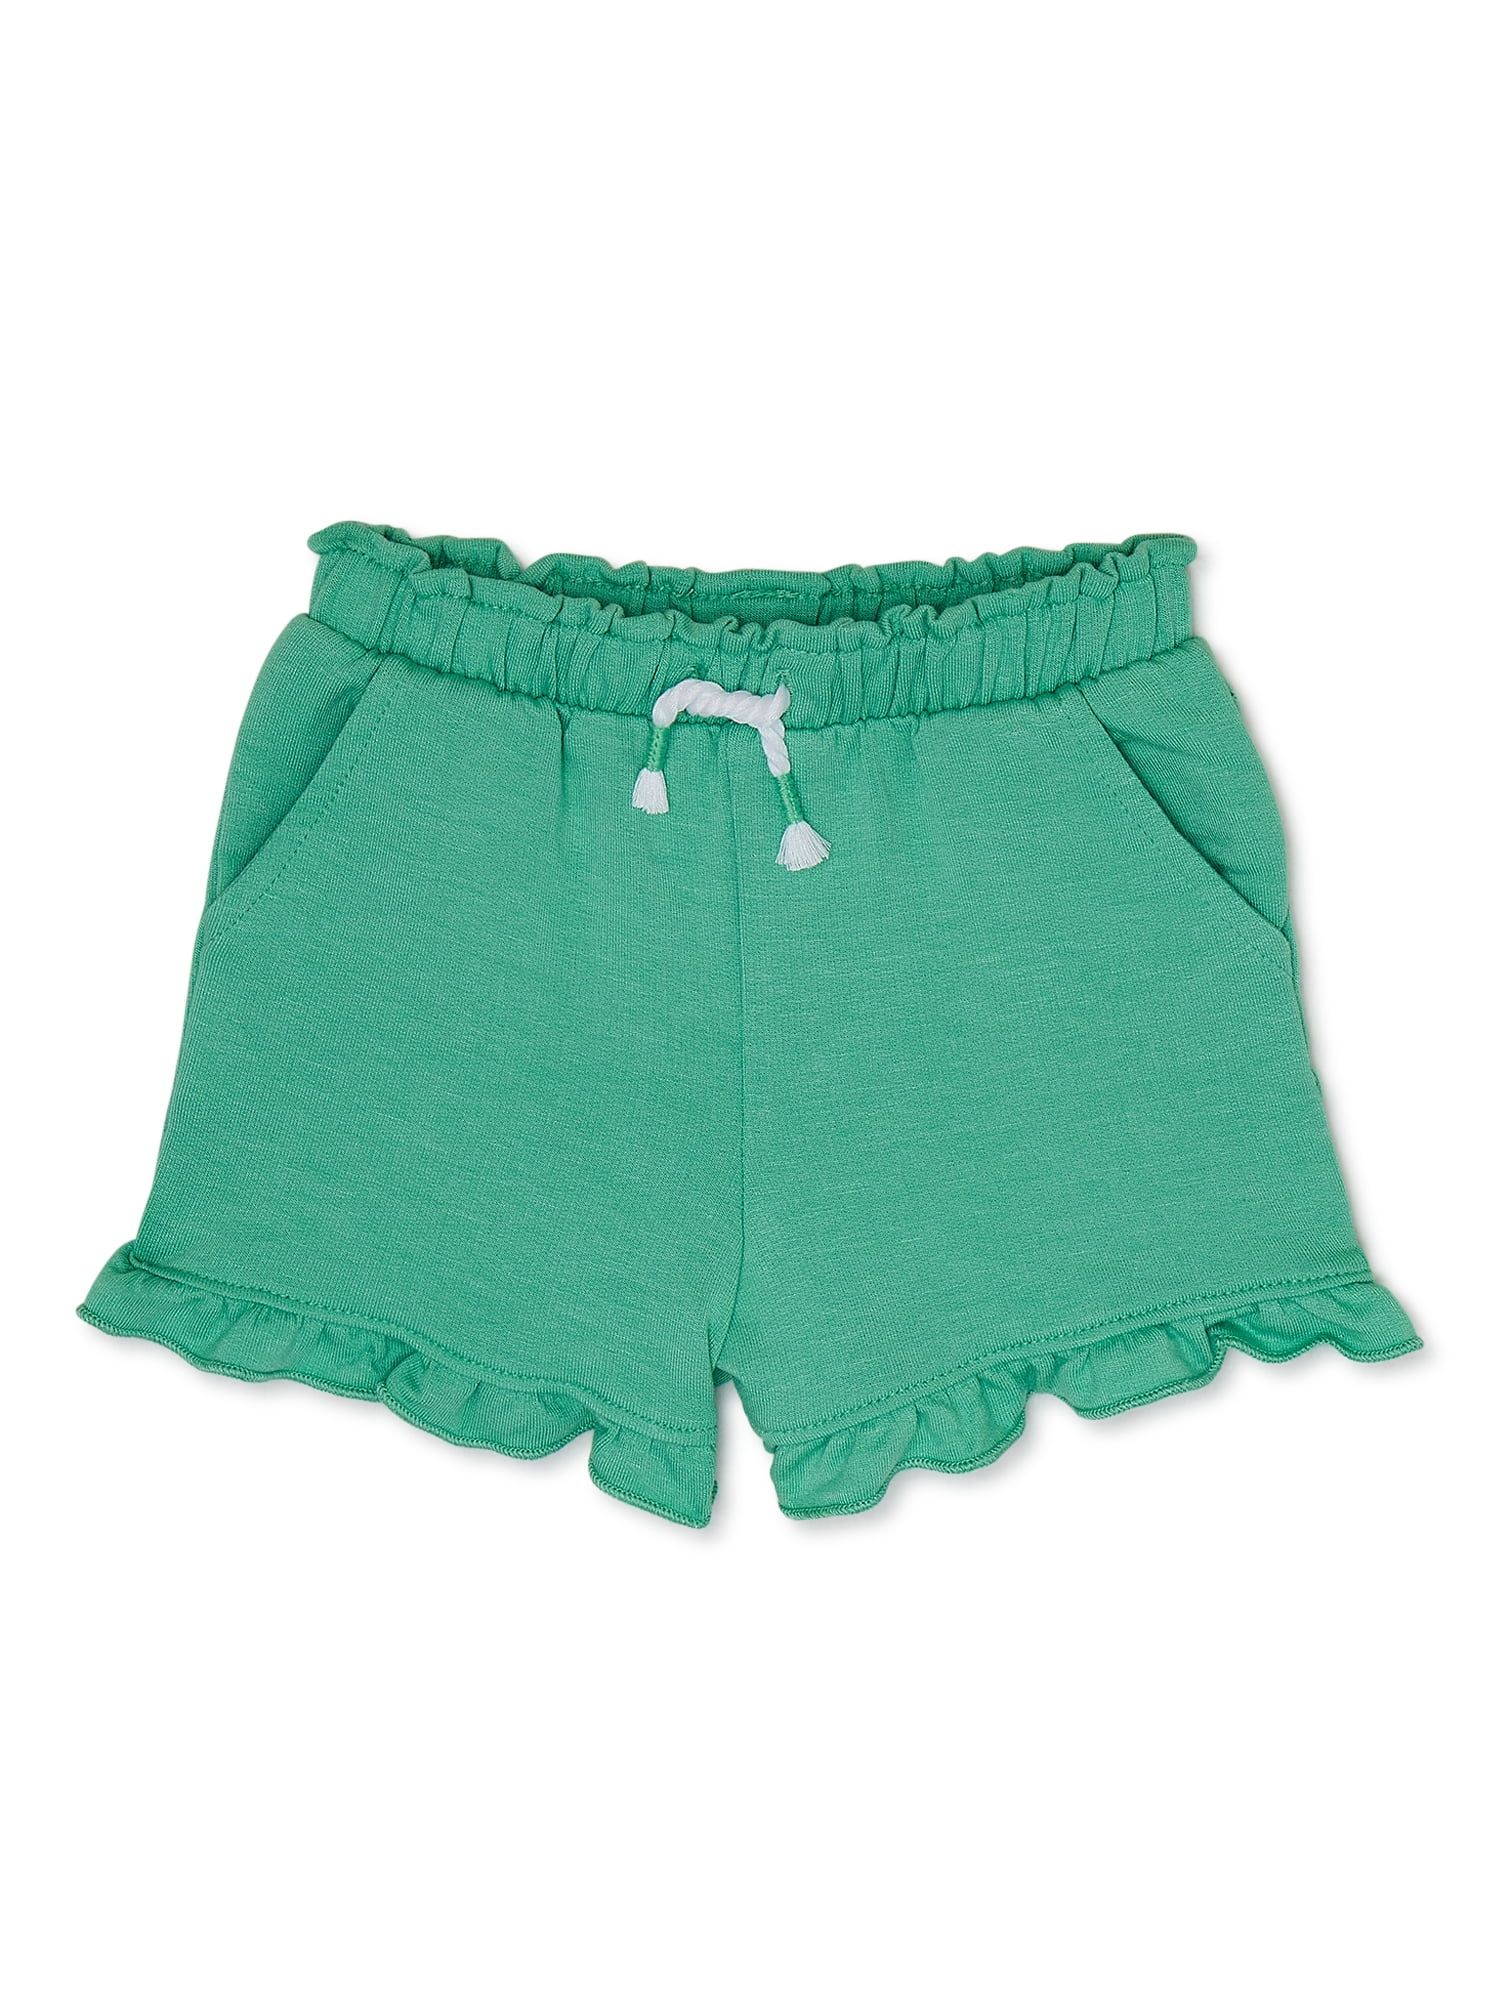 Garanimals Baby Girl French Terry Ruffle Shorts, Sizes 0-24 Months | Walmart (US)